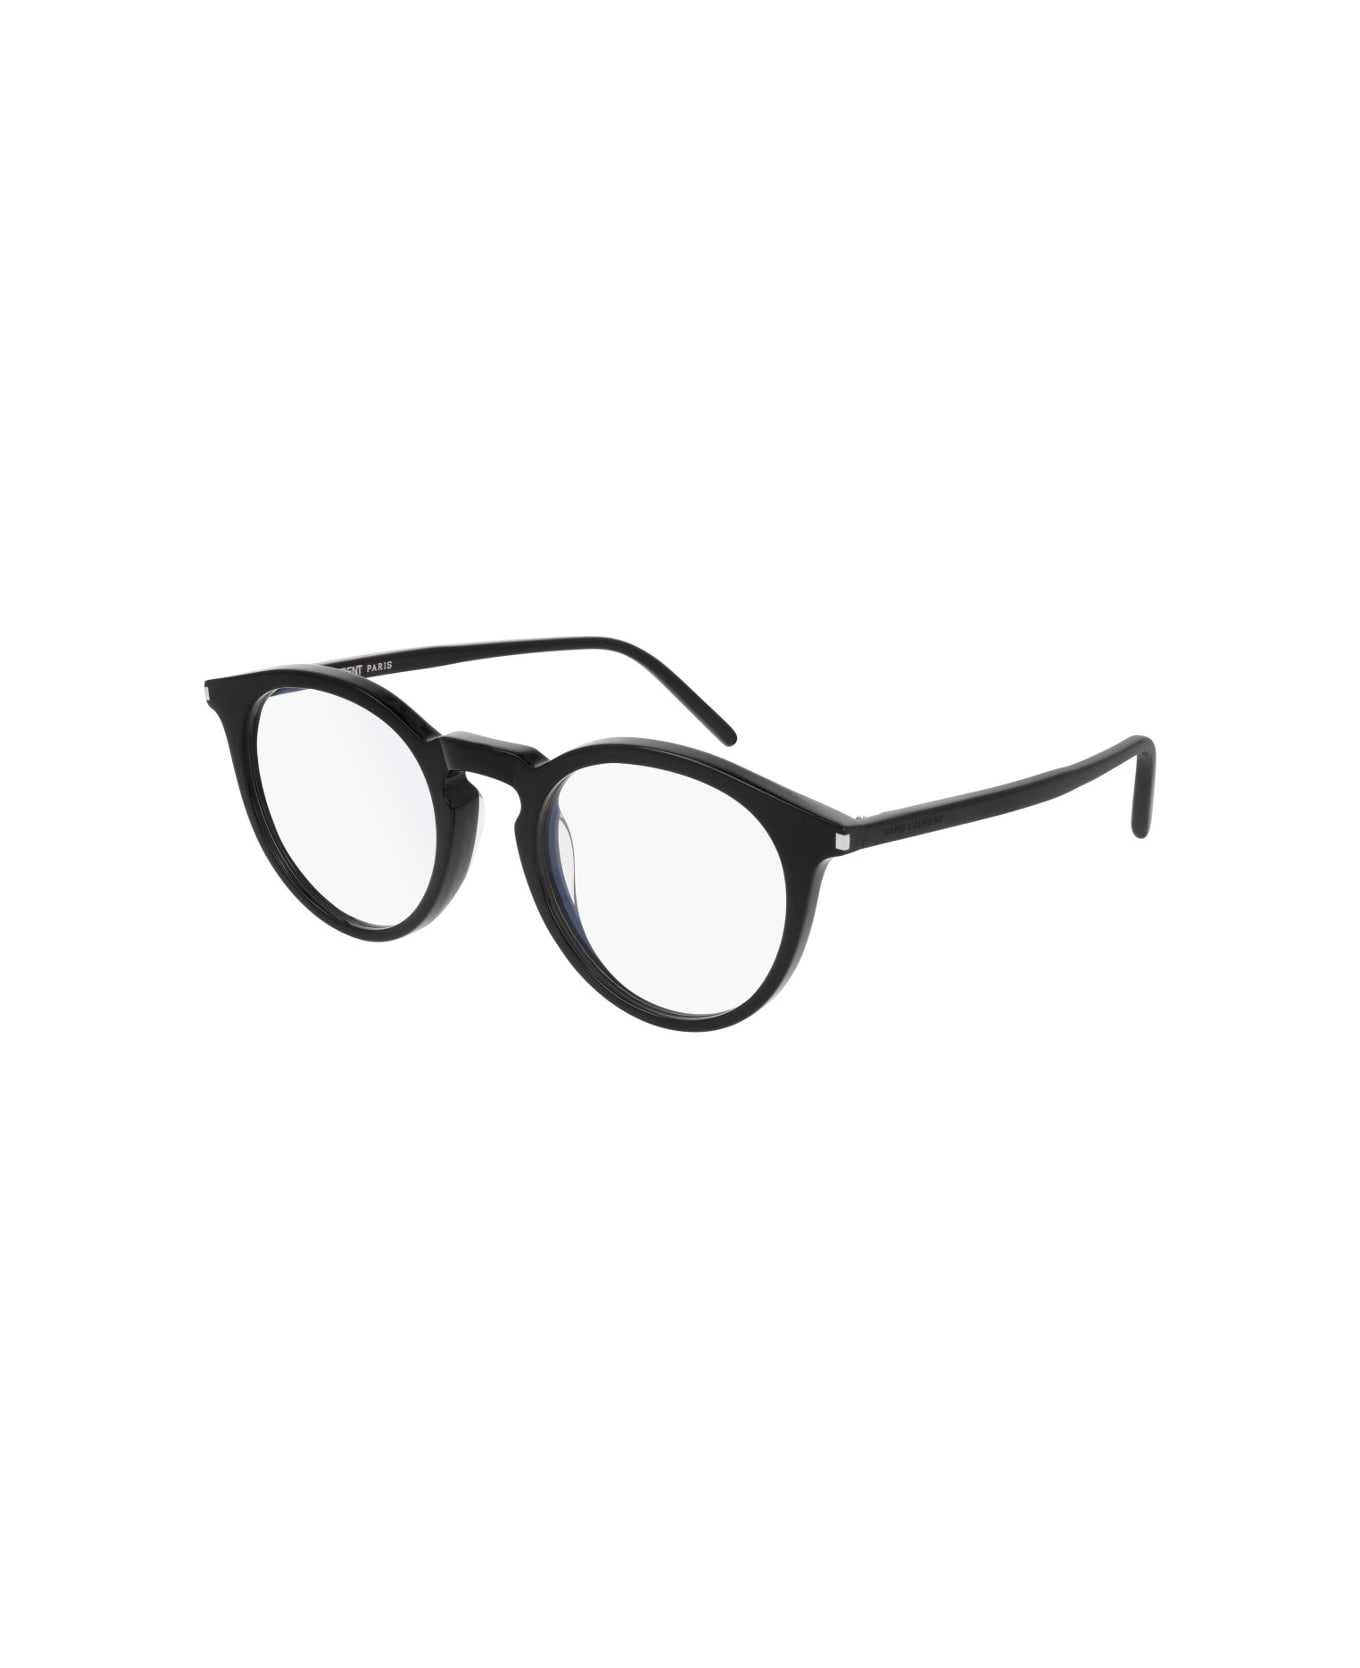 Saint Laurent Eyewear SL347 005 Glasses - Nero